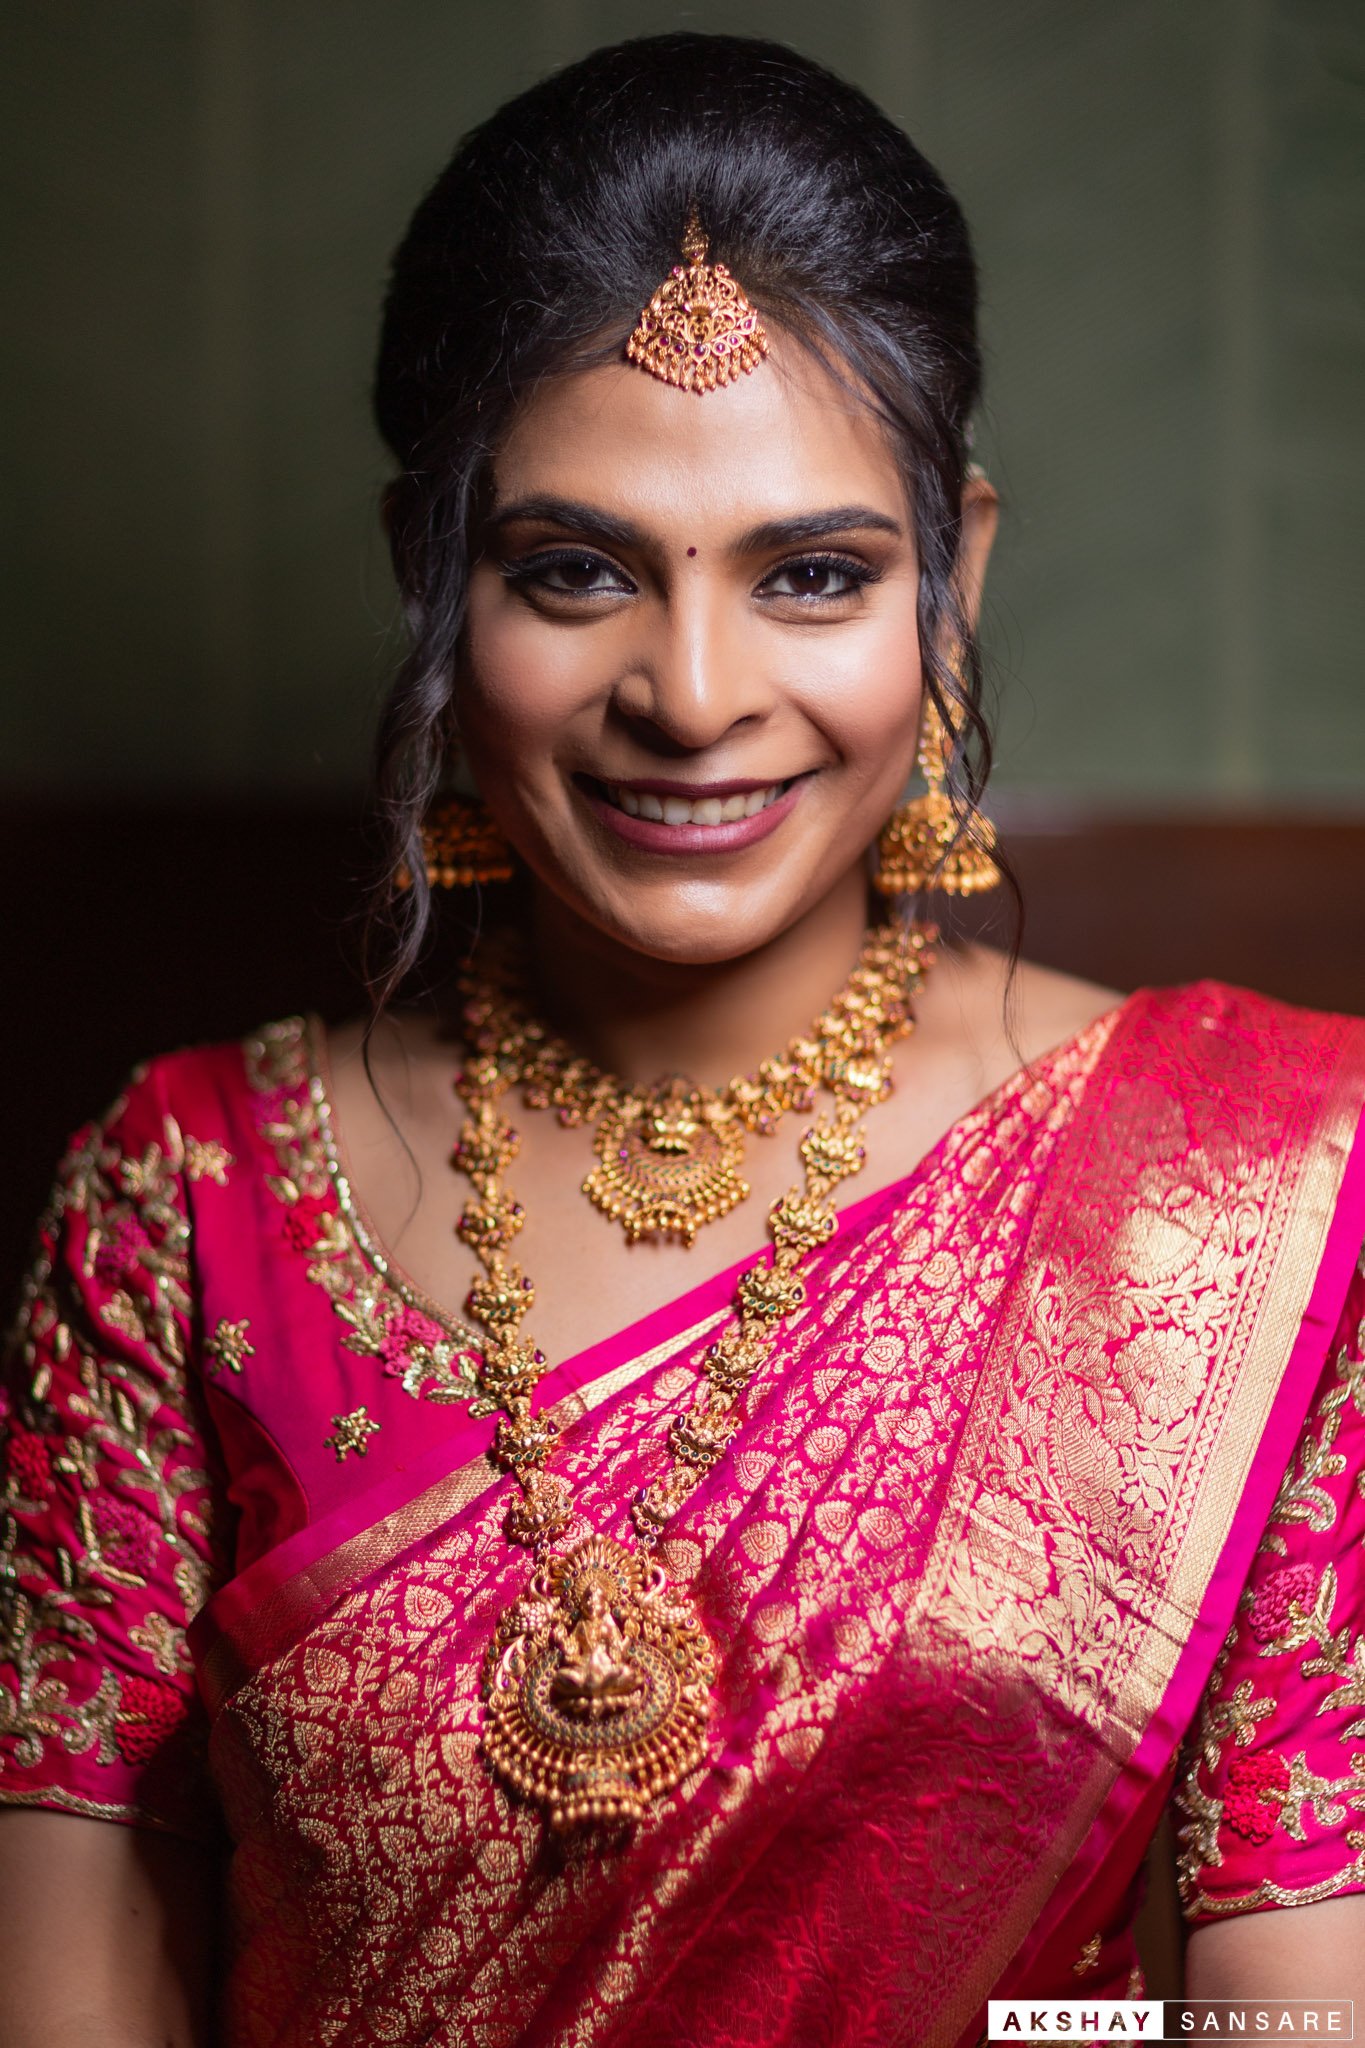 Lipika x Bhavya Compress Akshay Sansare Photography & Films Best wedding photographers in mumbai india-40.jpg